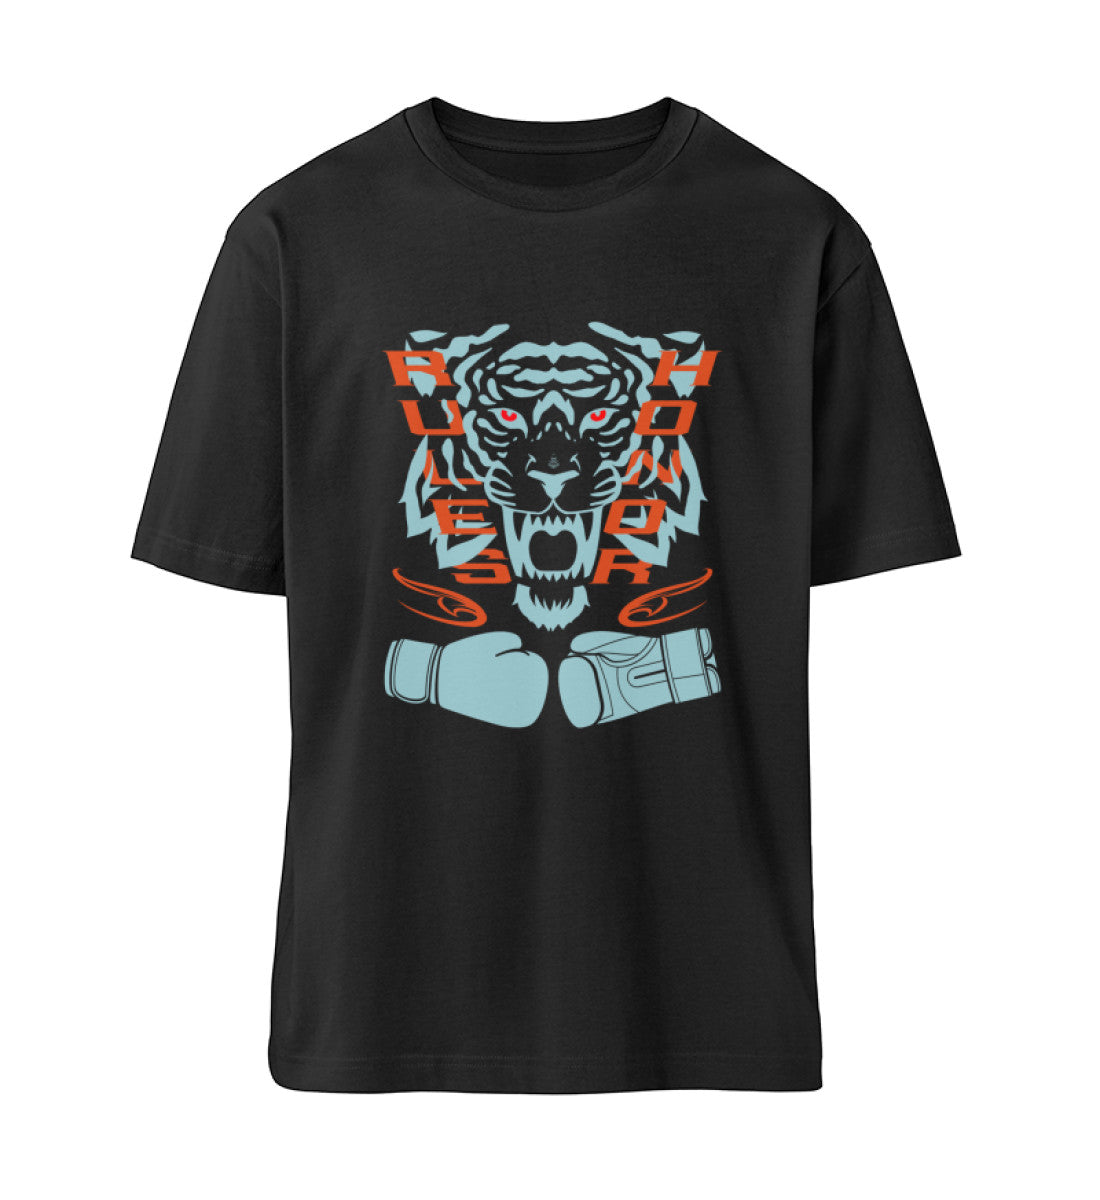 Black T-Shirt Damen Herren Unisex mit Print Design der Boxing Rules and Honor Kollektion von Roger Rockawoo Clothing